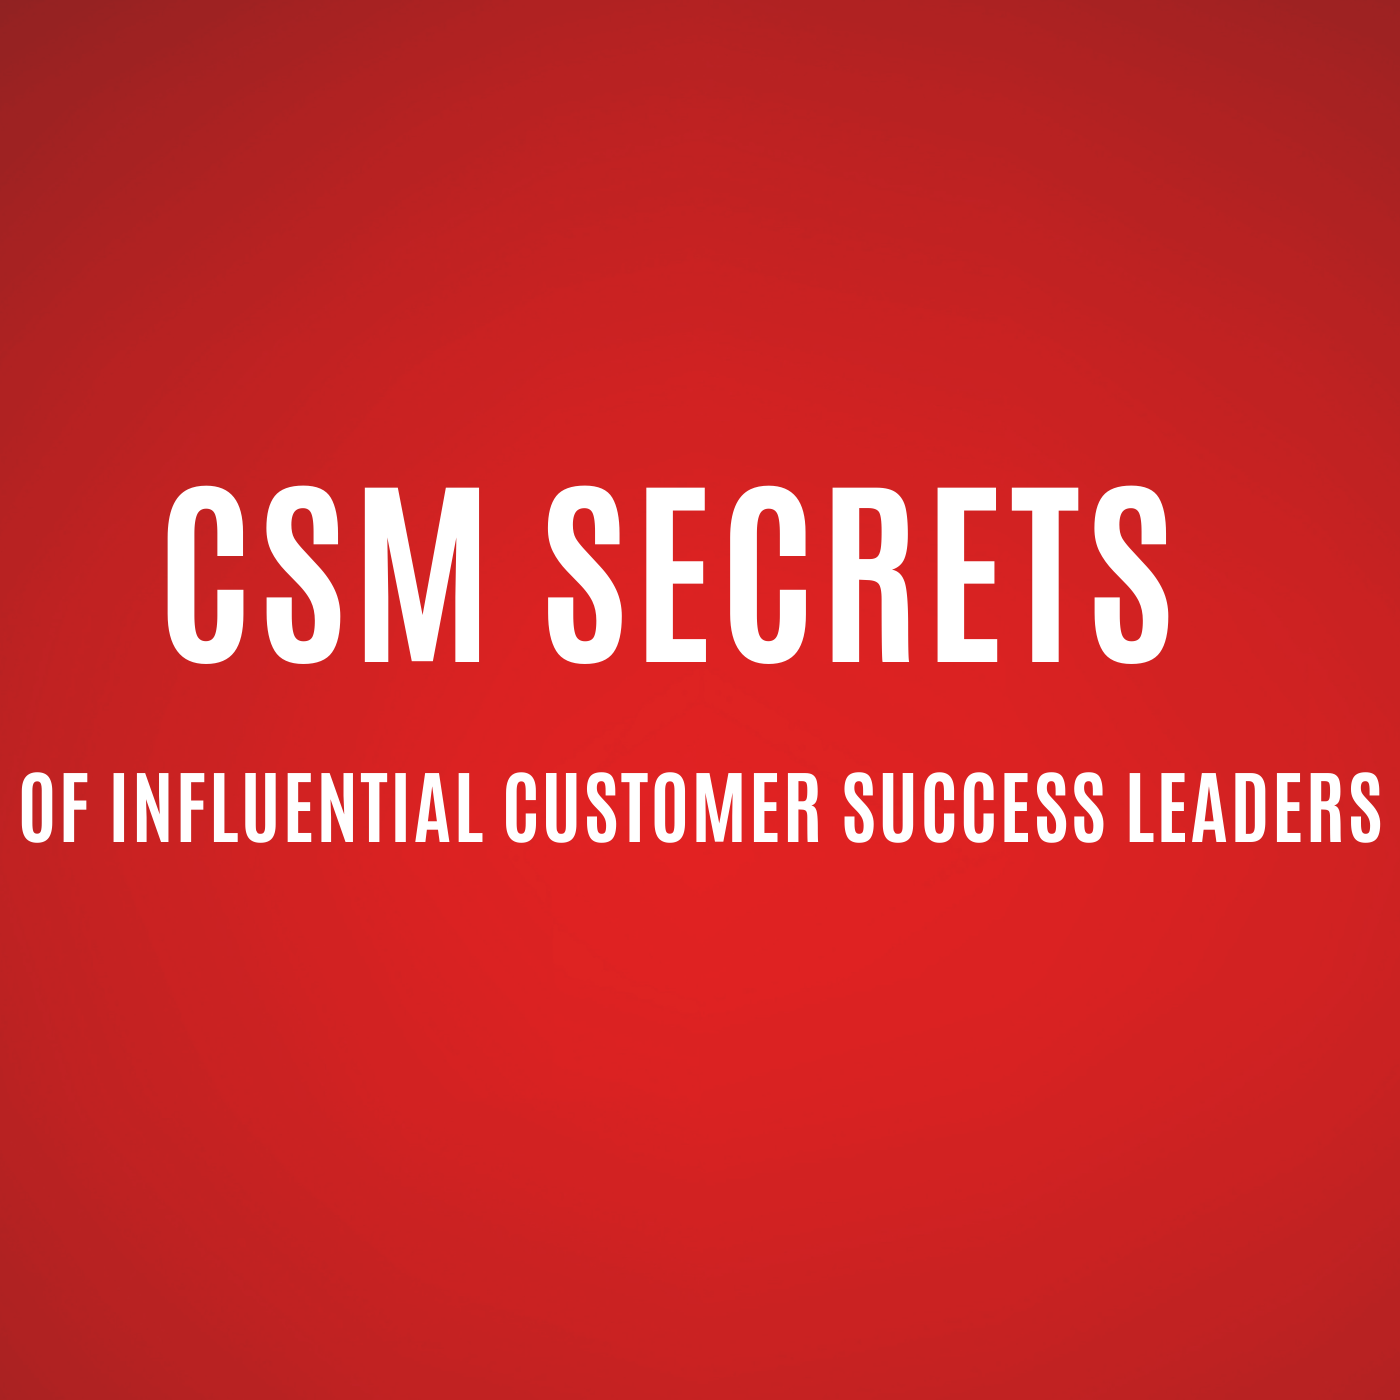 CSM secrets Of Influential Customer Success leaders